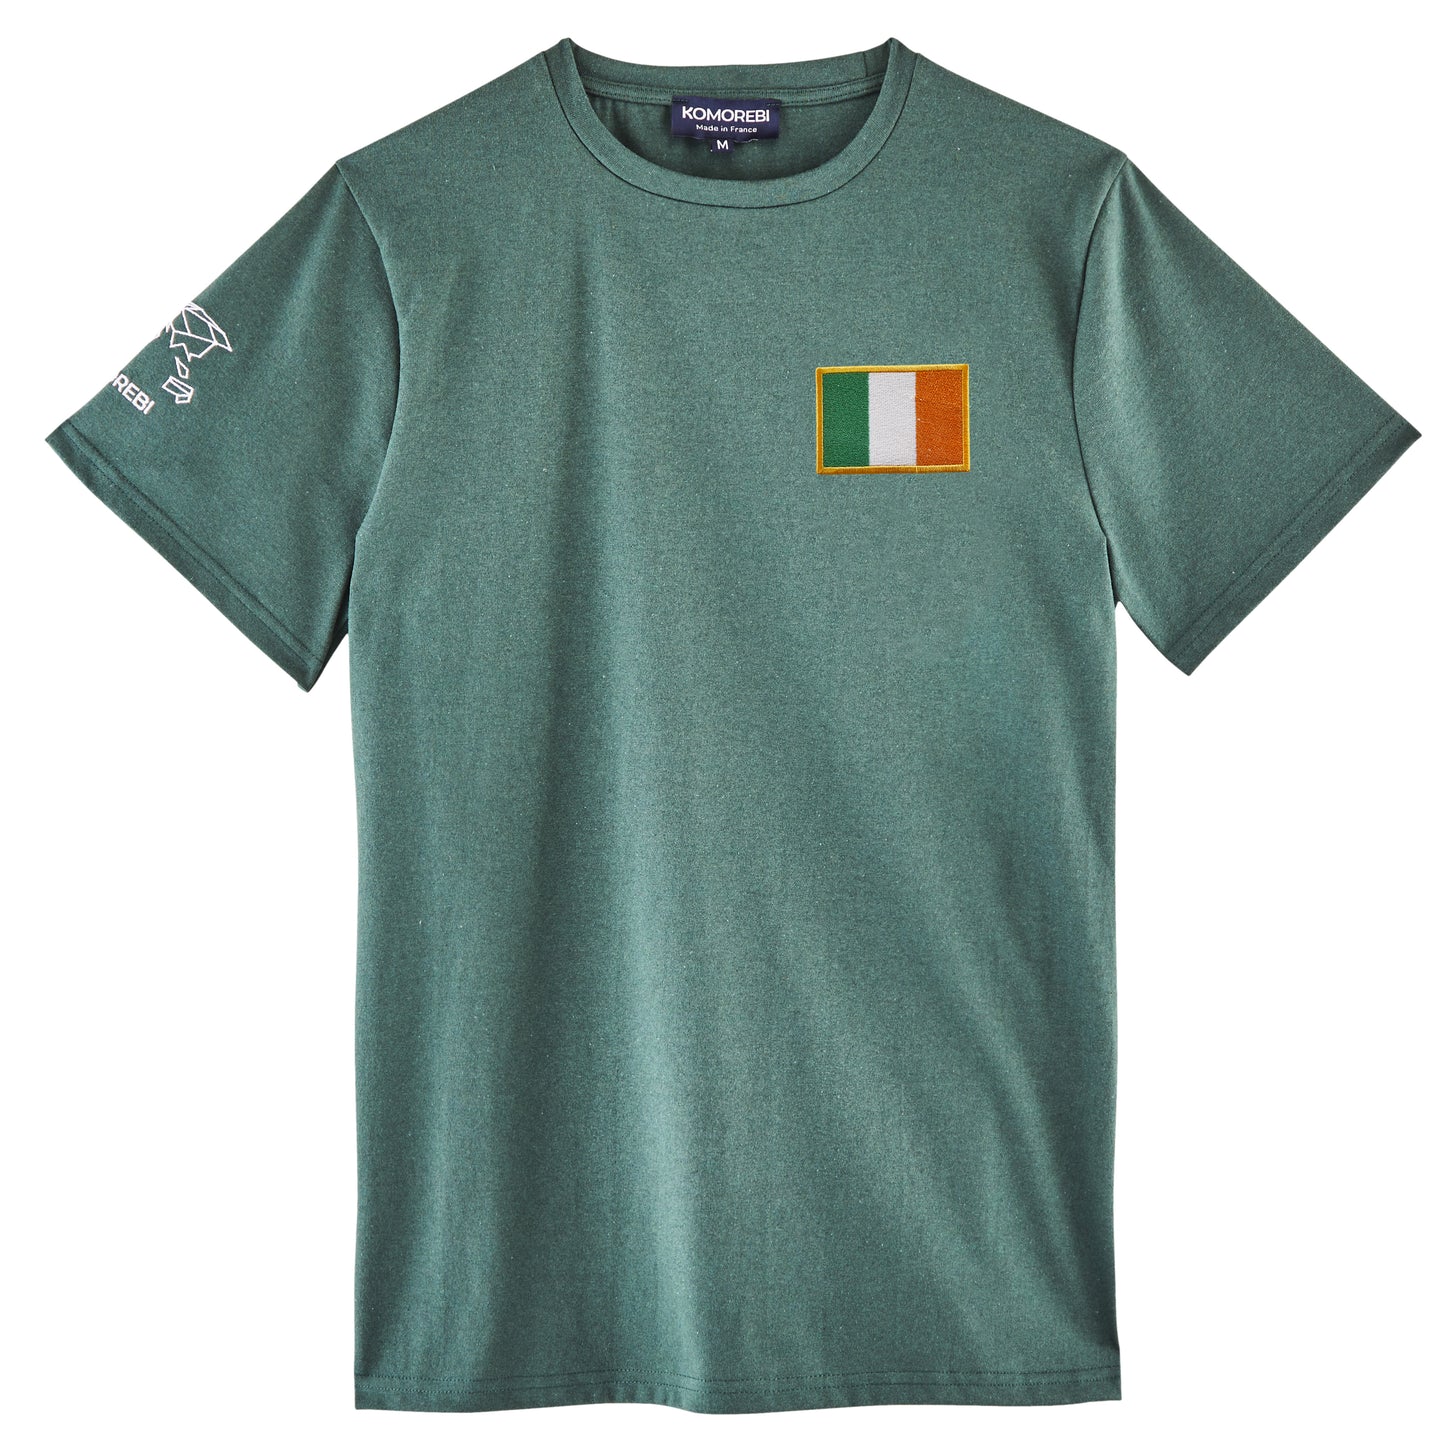 Ireland • T-shirt